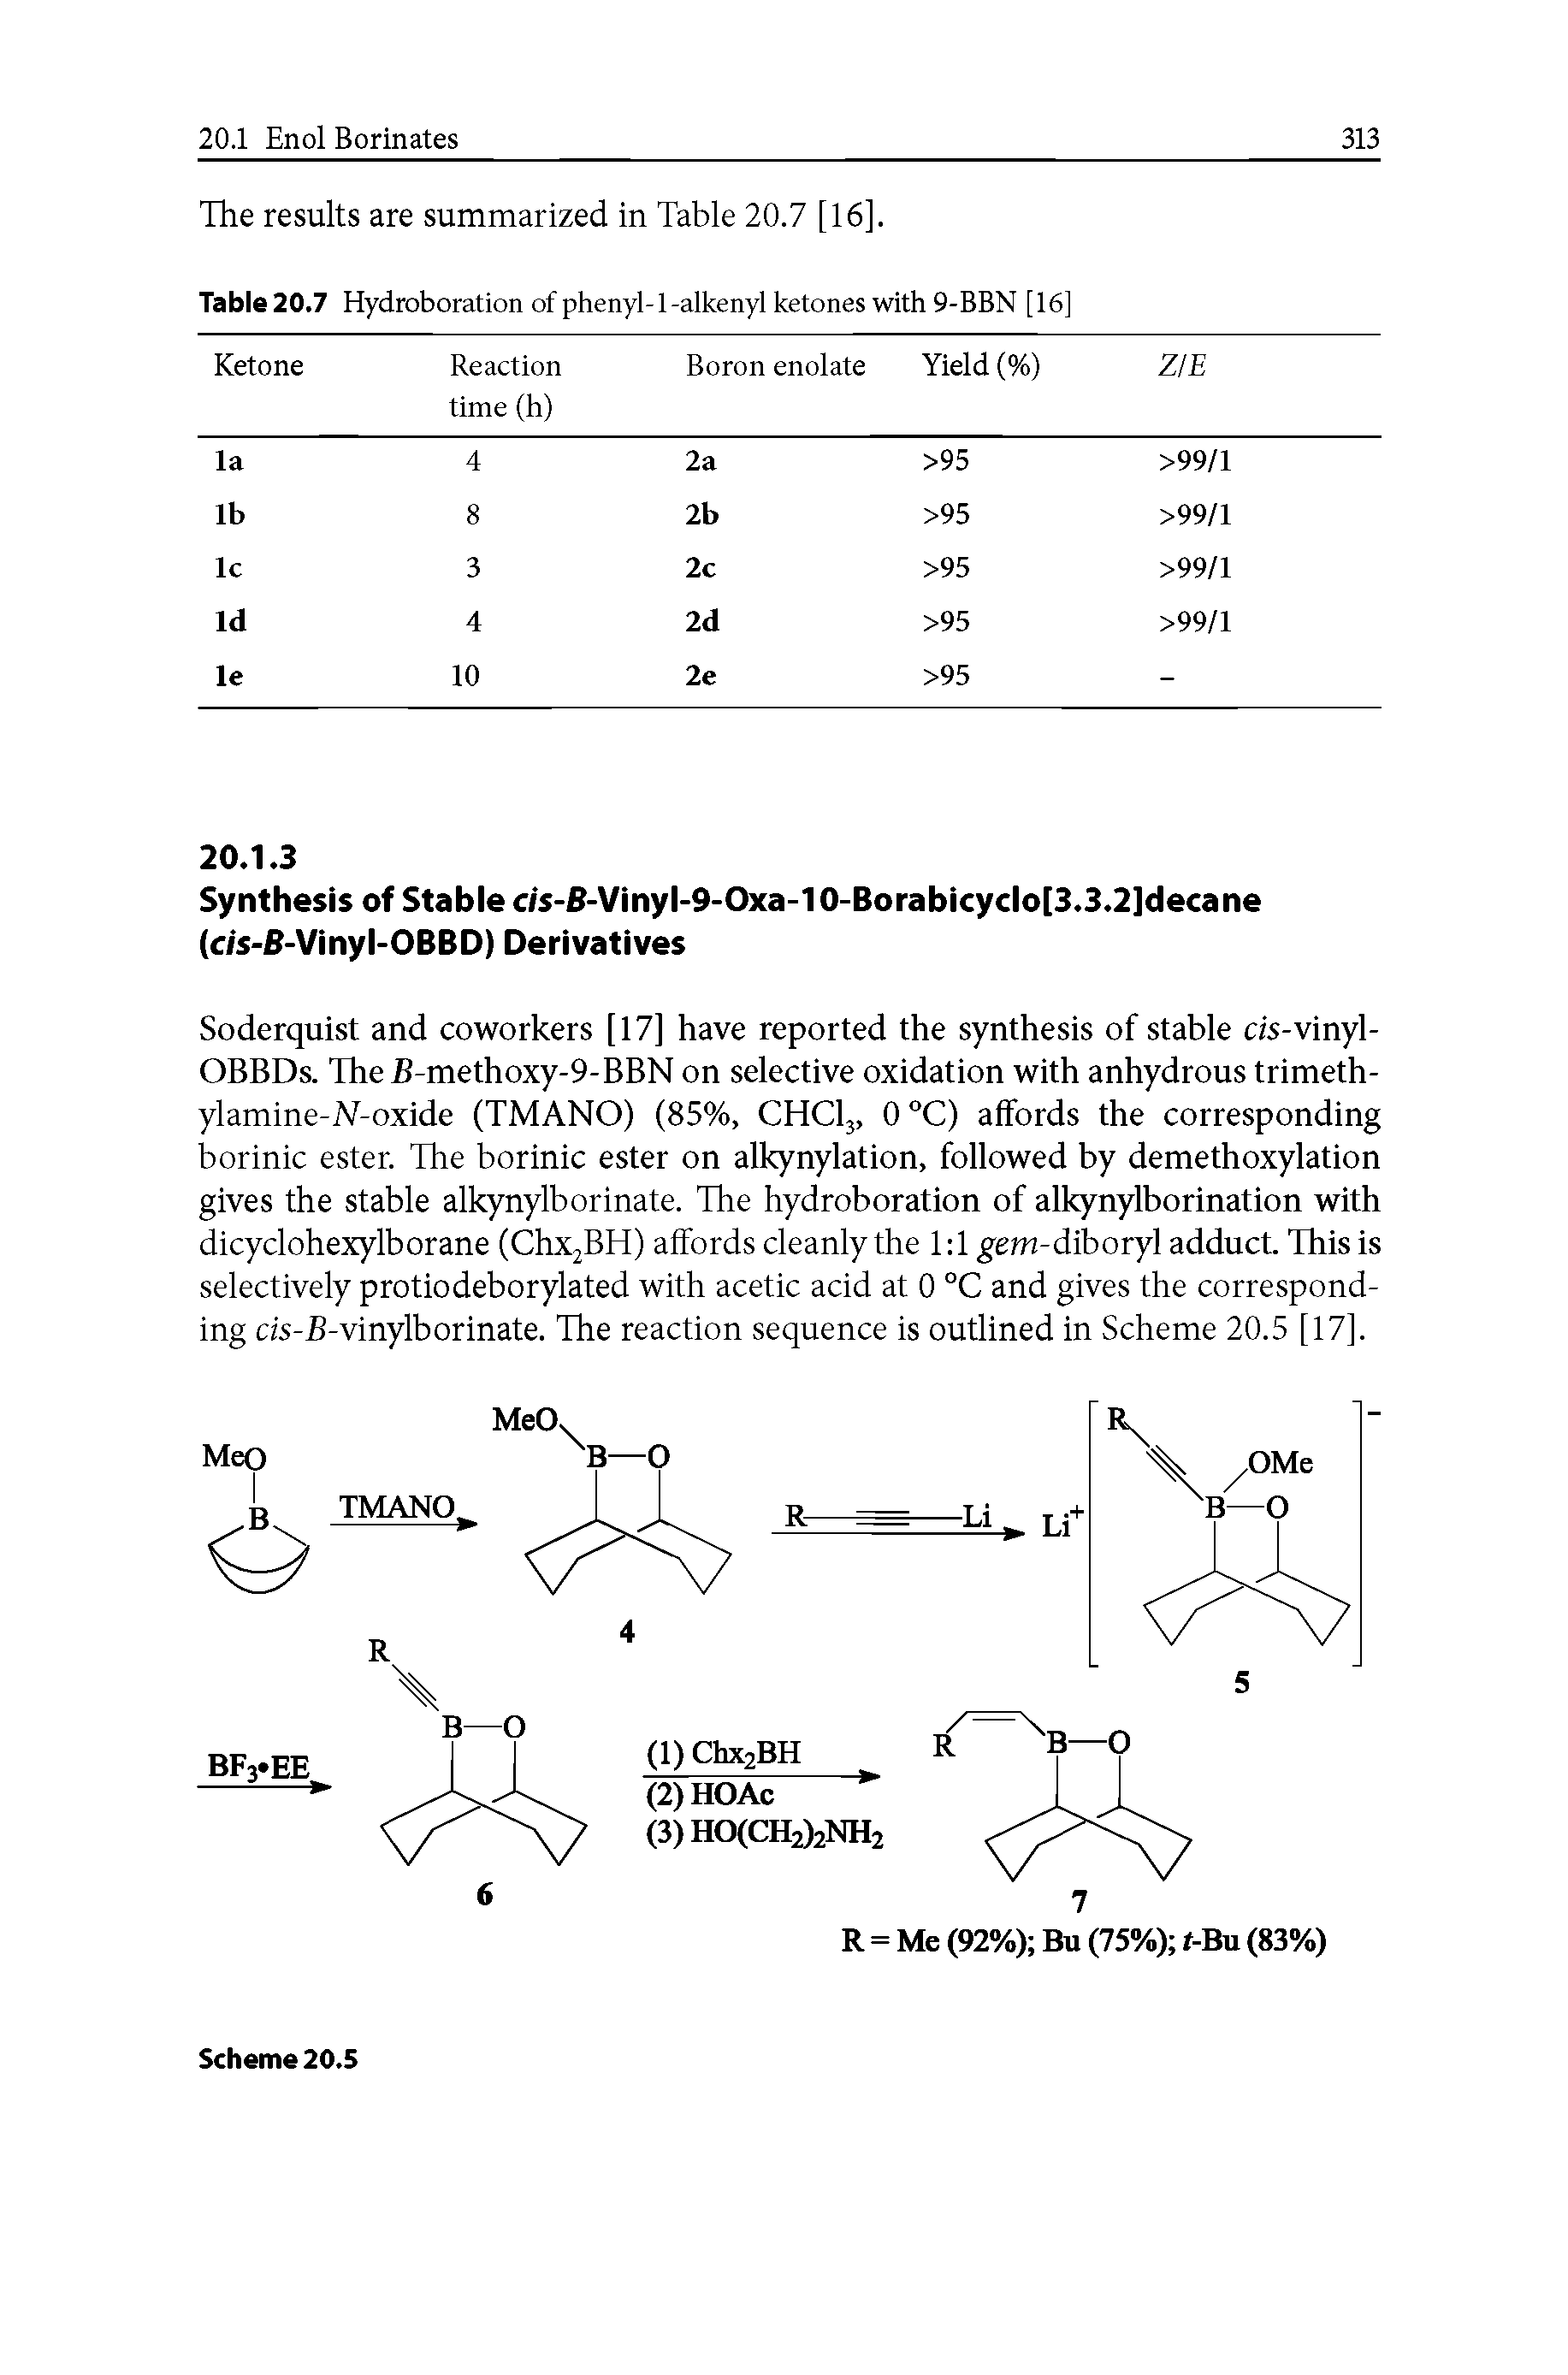 Table 20.7 Hydroboration of phenyl-1 -alkenyl ketones with 9-BBN [16] ...